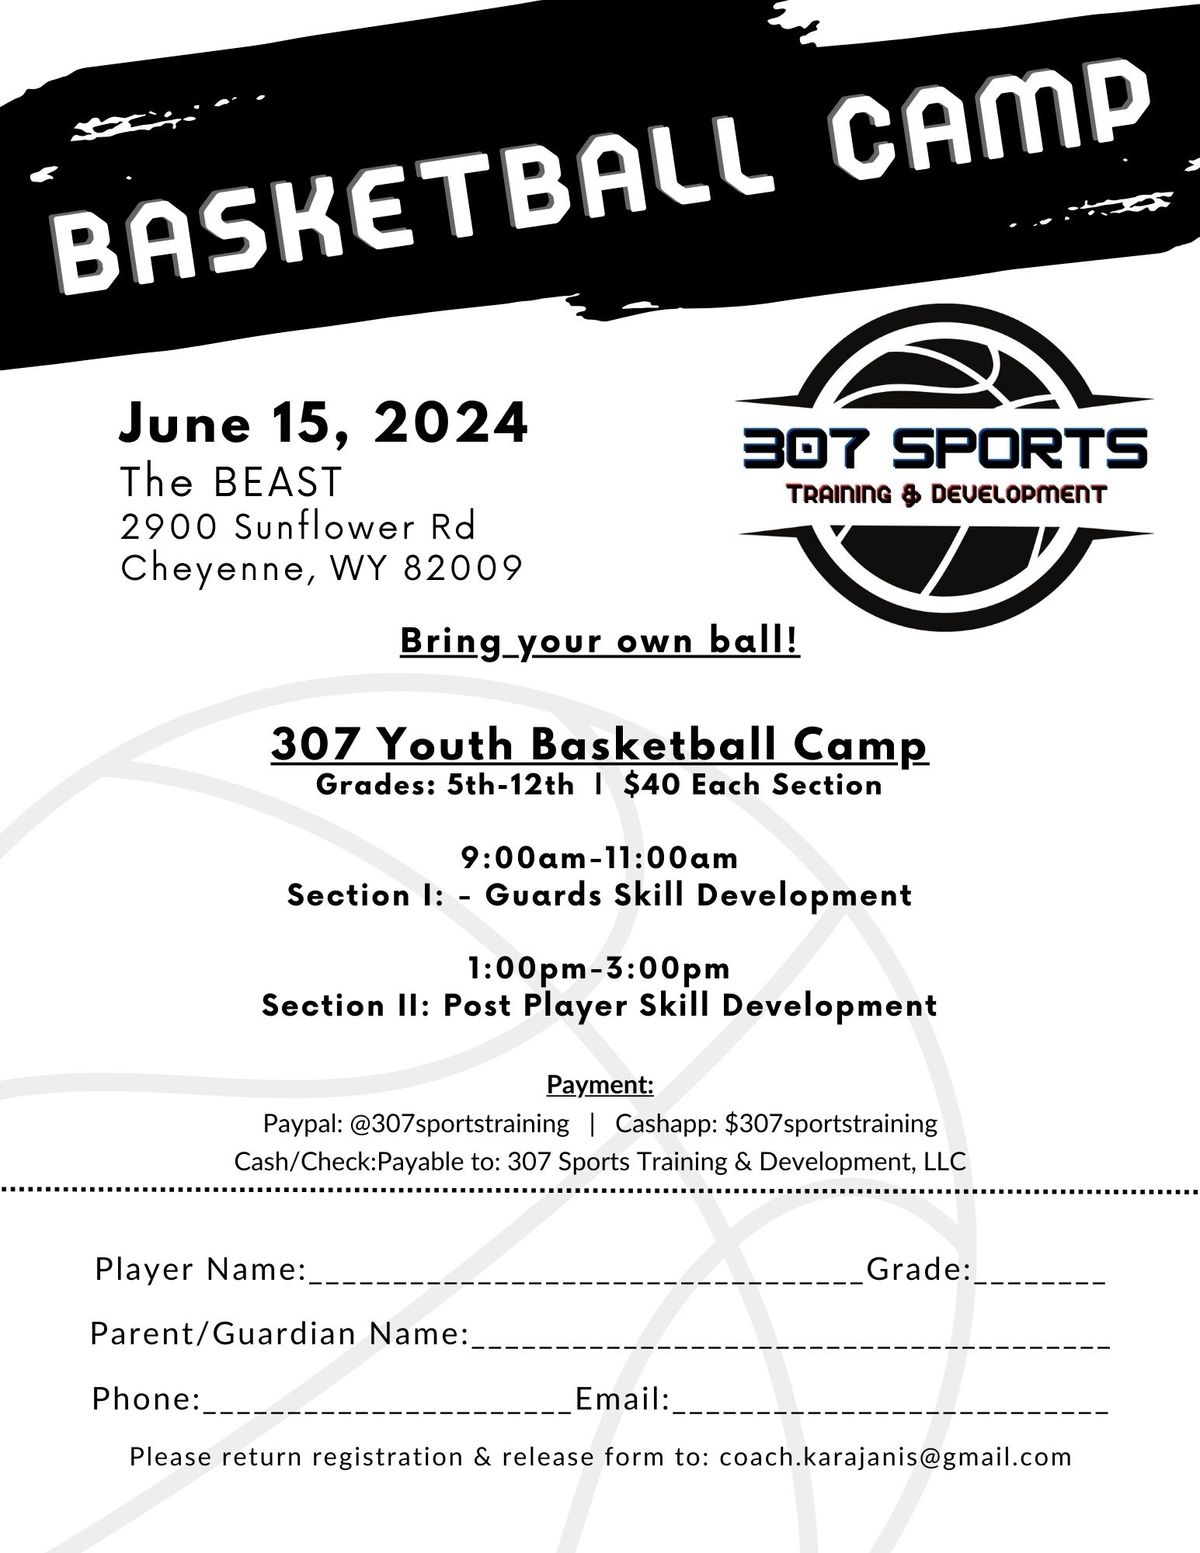 307 Youth Basketball Camp